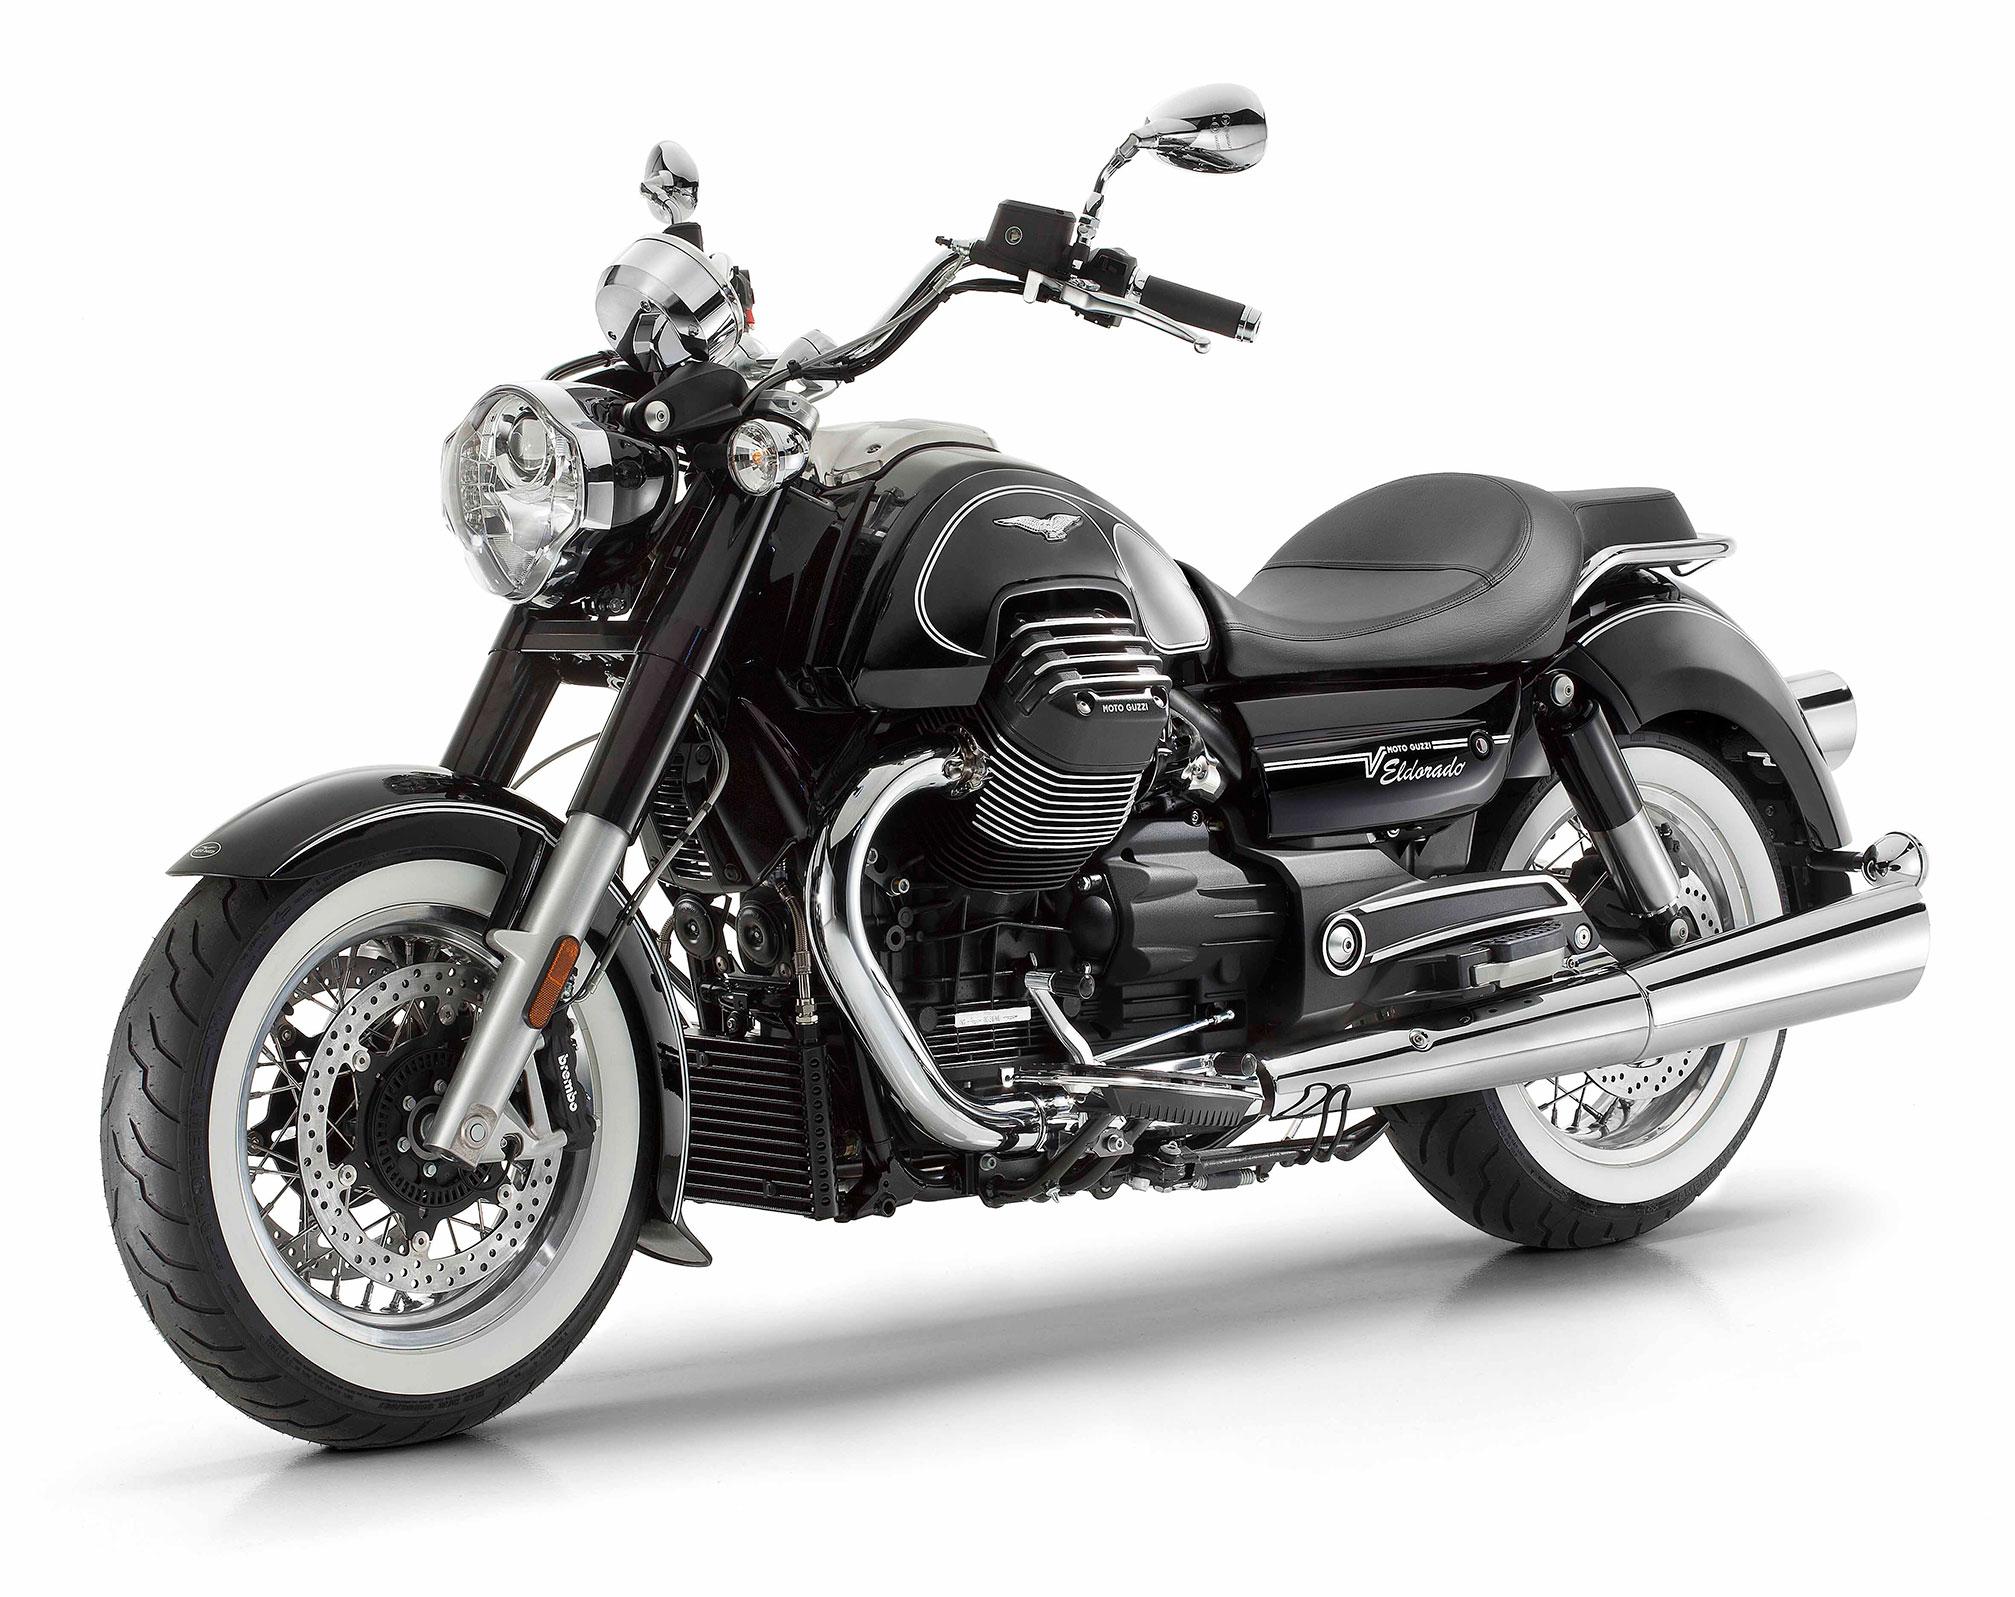 2015 x 1597 · jpeg - HQ Wallpaper Moto Guzzi Eldorado Motorcycle | Motorcycles-for-sale.biz